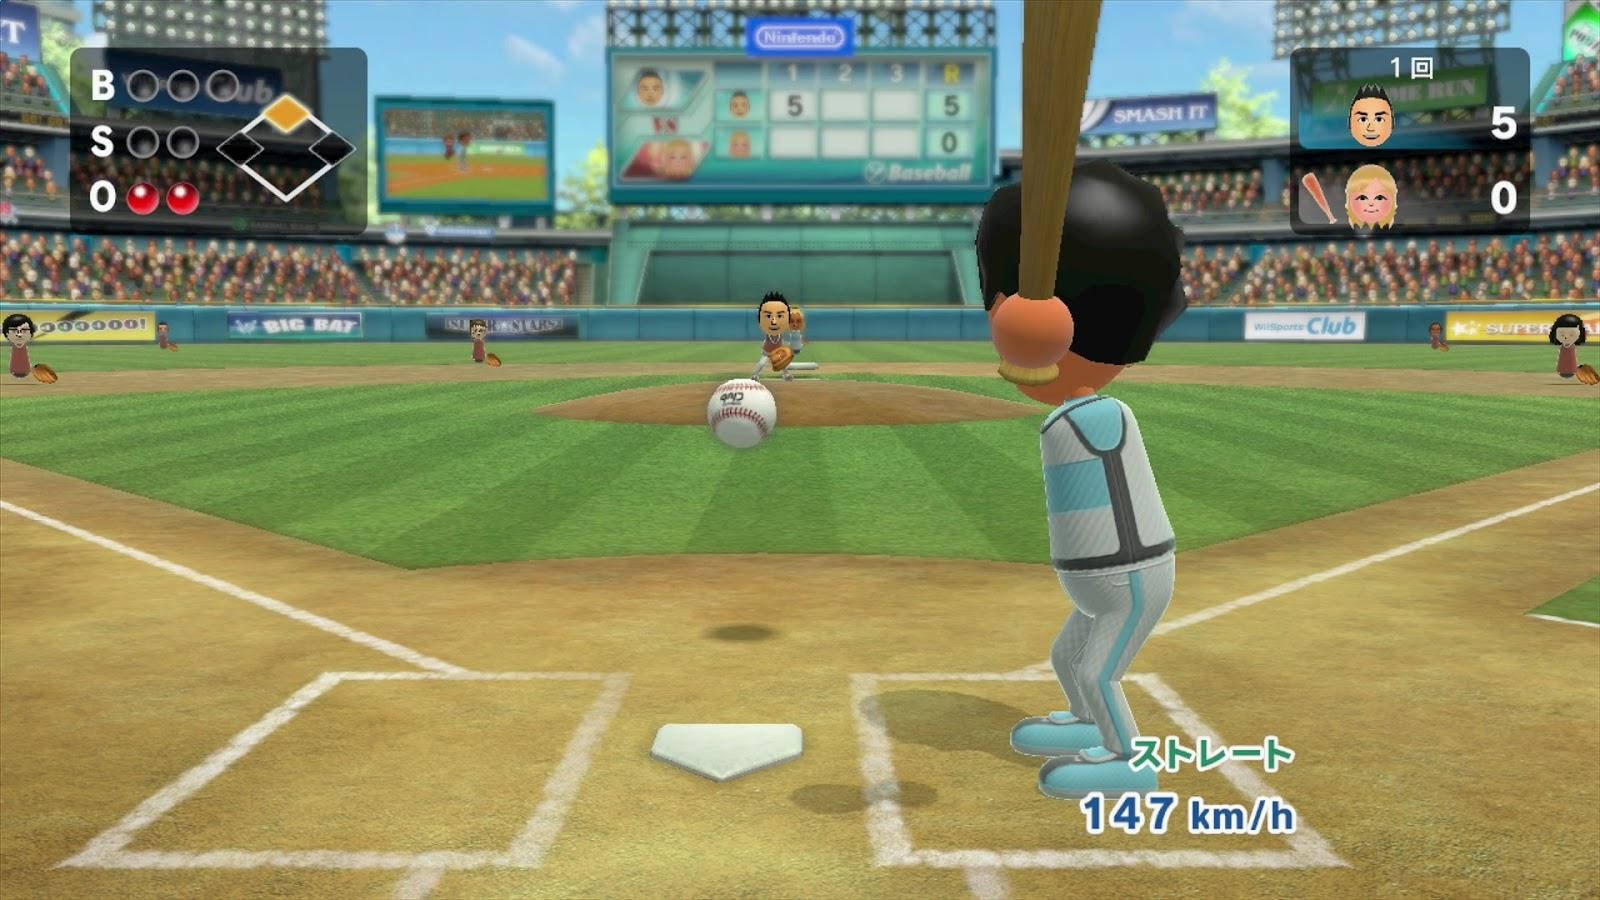 Wii Sports Baseball Game Wallpaper